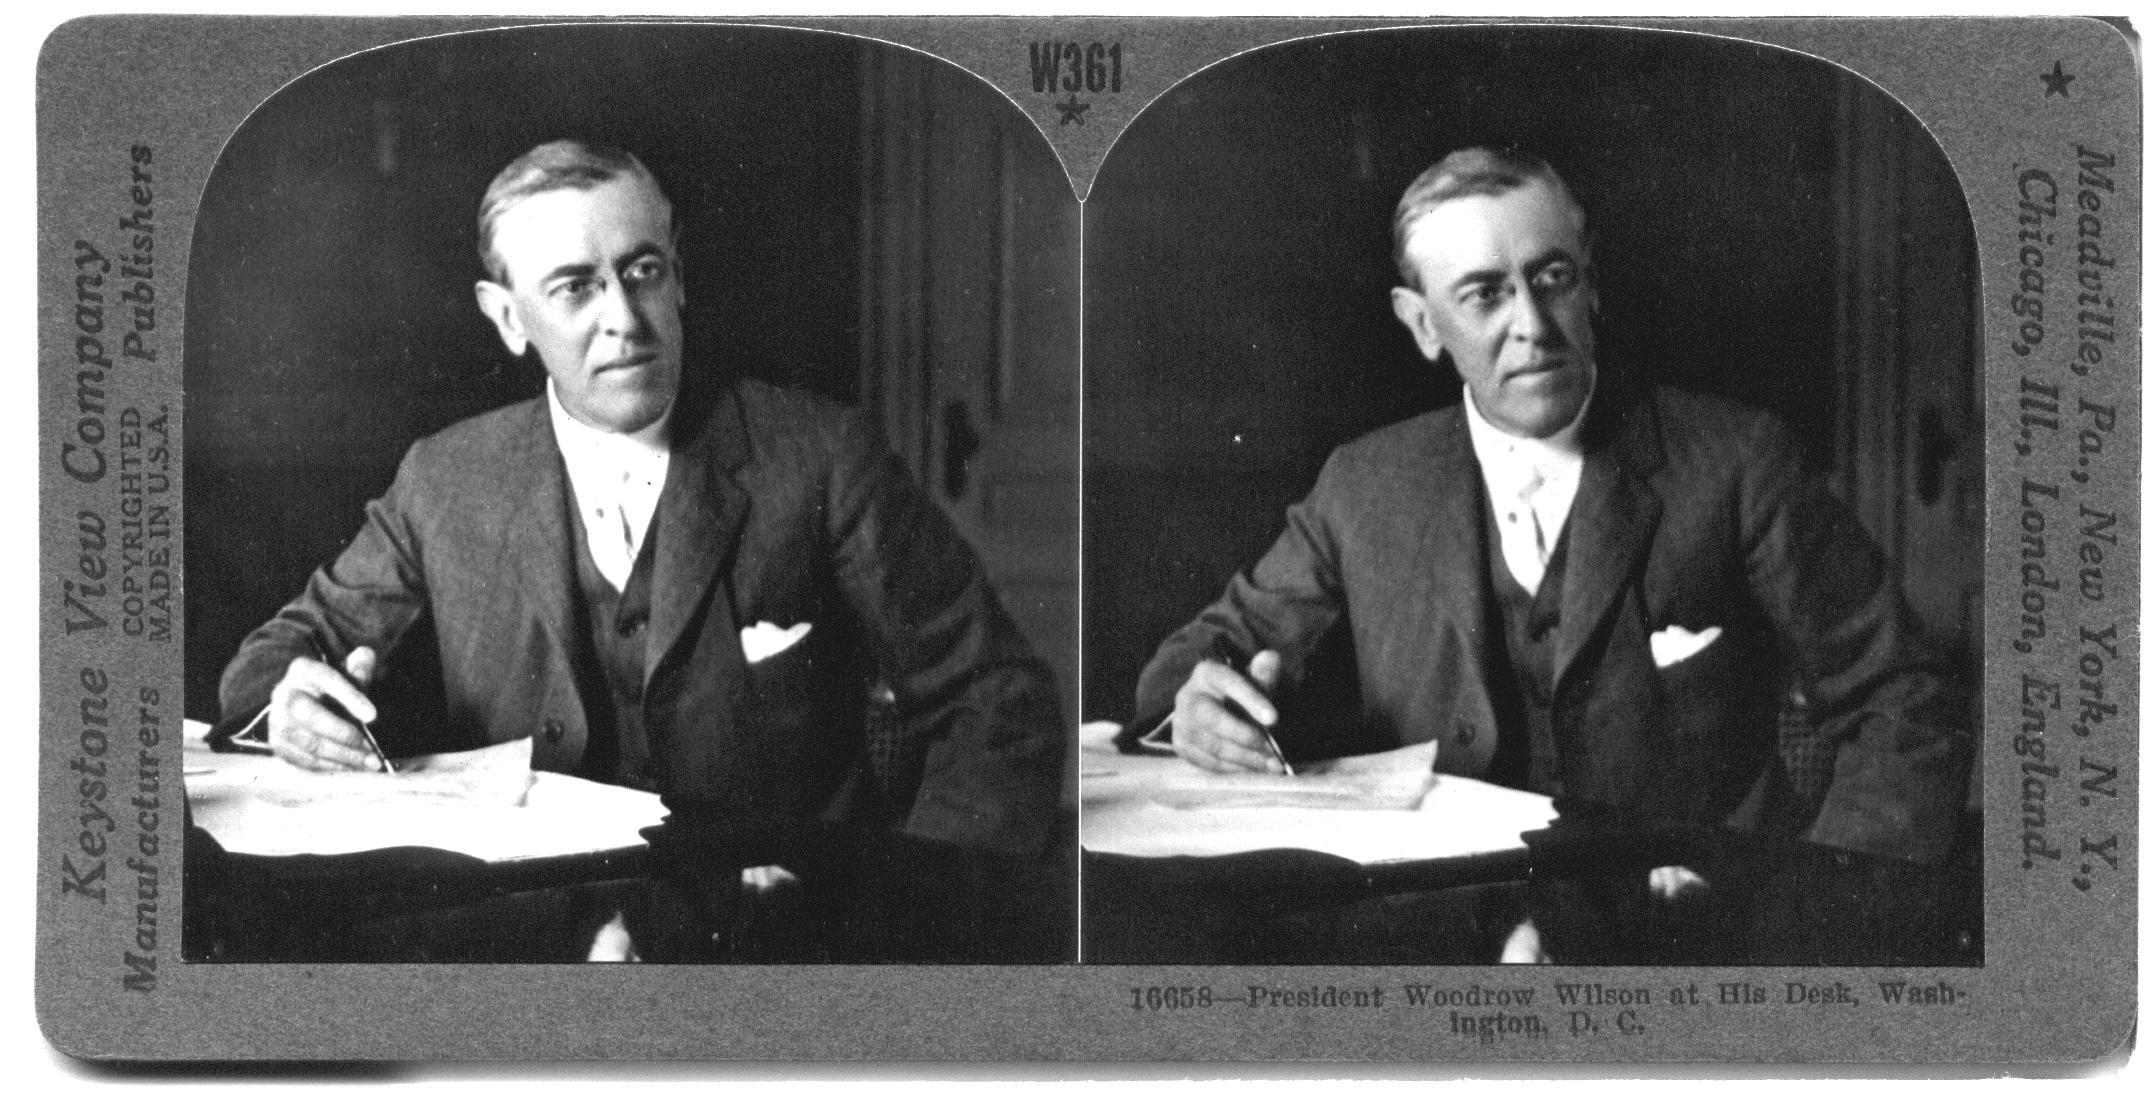 President Woodrow Wilson at His Desk, Washington, D.C.